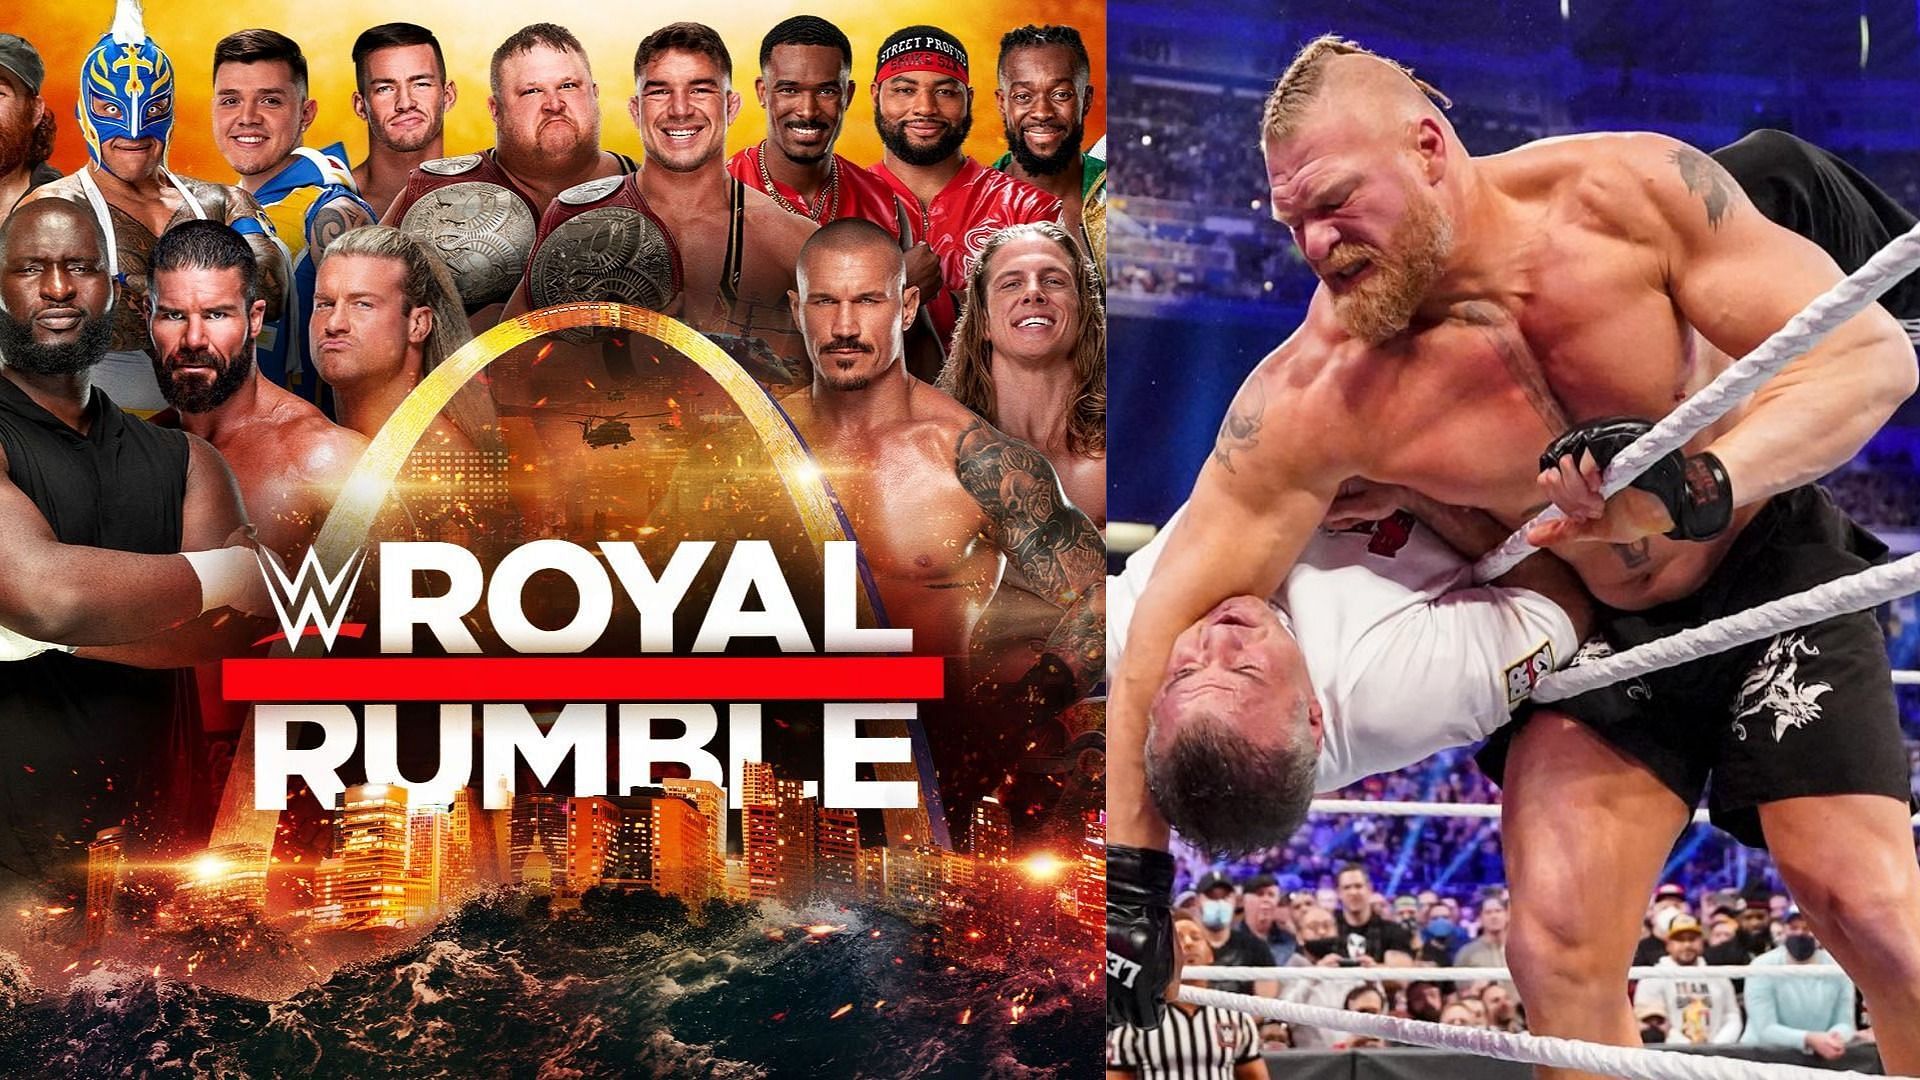 The Beast Incarnate won the 2022 Royal Rumble match